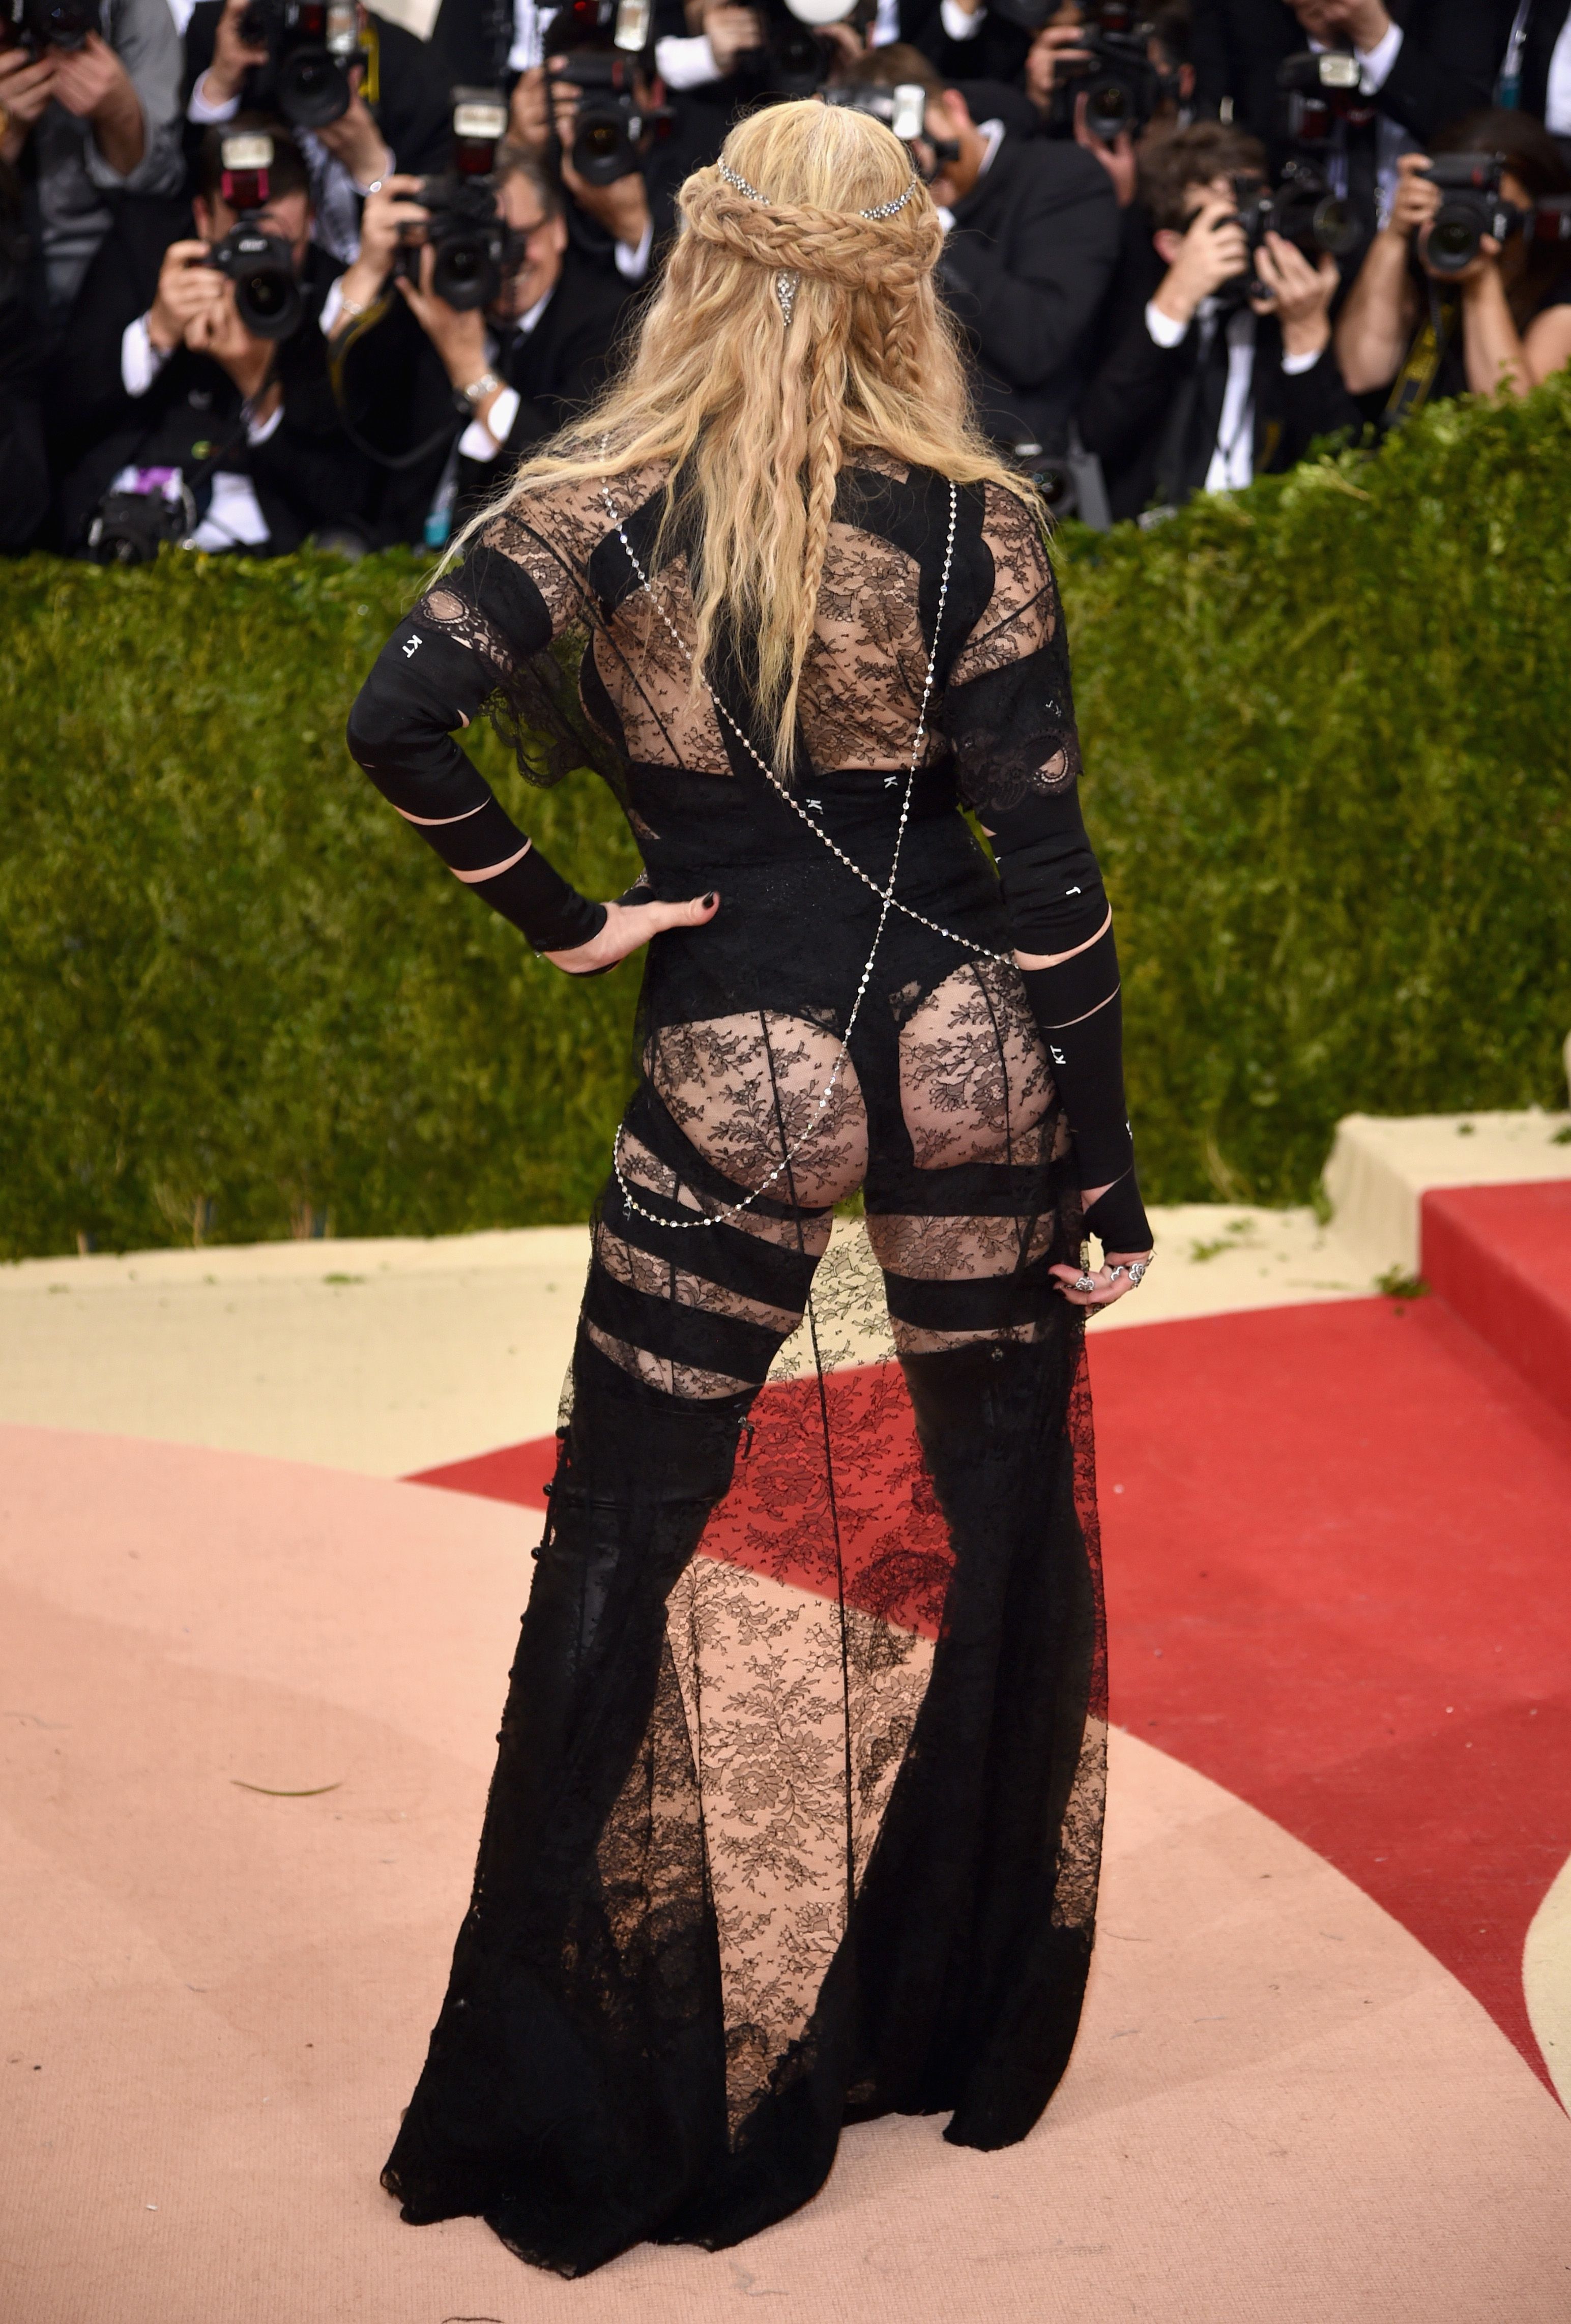 Met Gala 2016: Madonna defends dress with Facebook rant